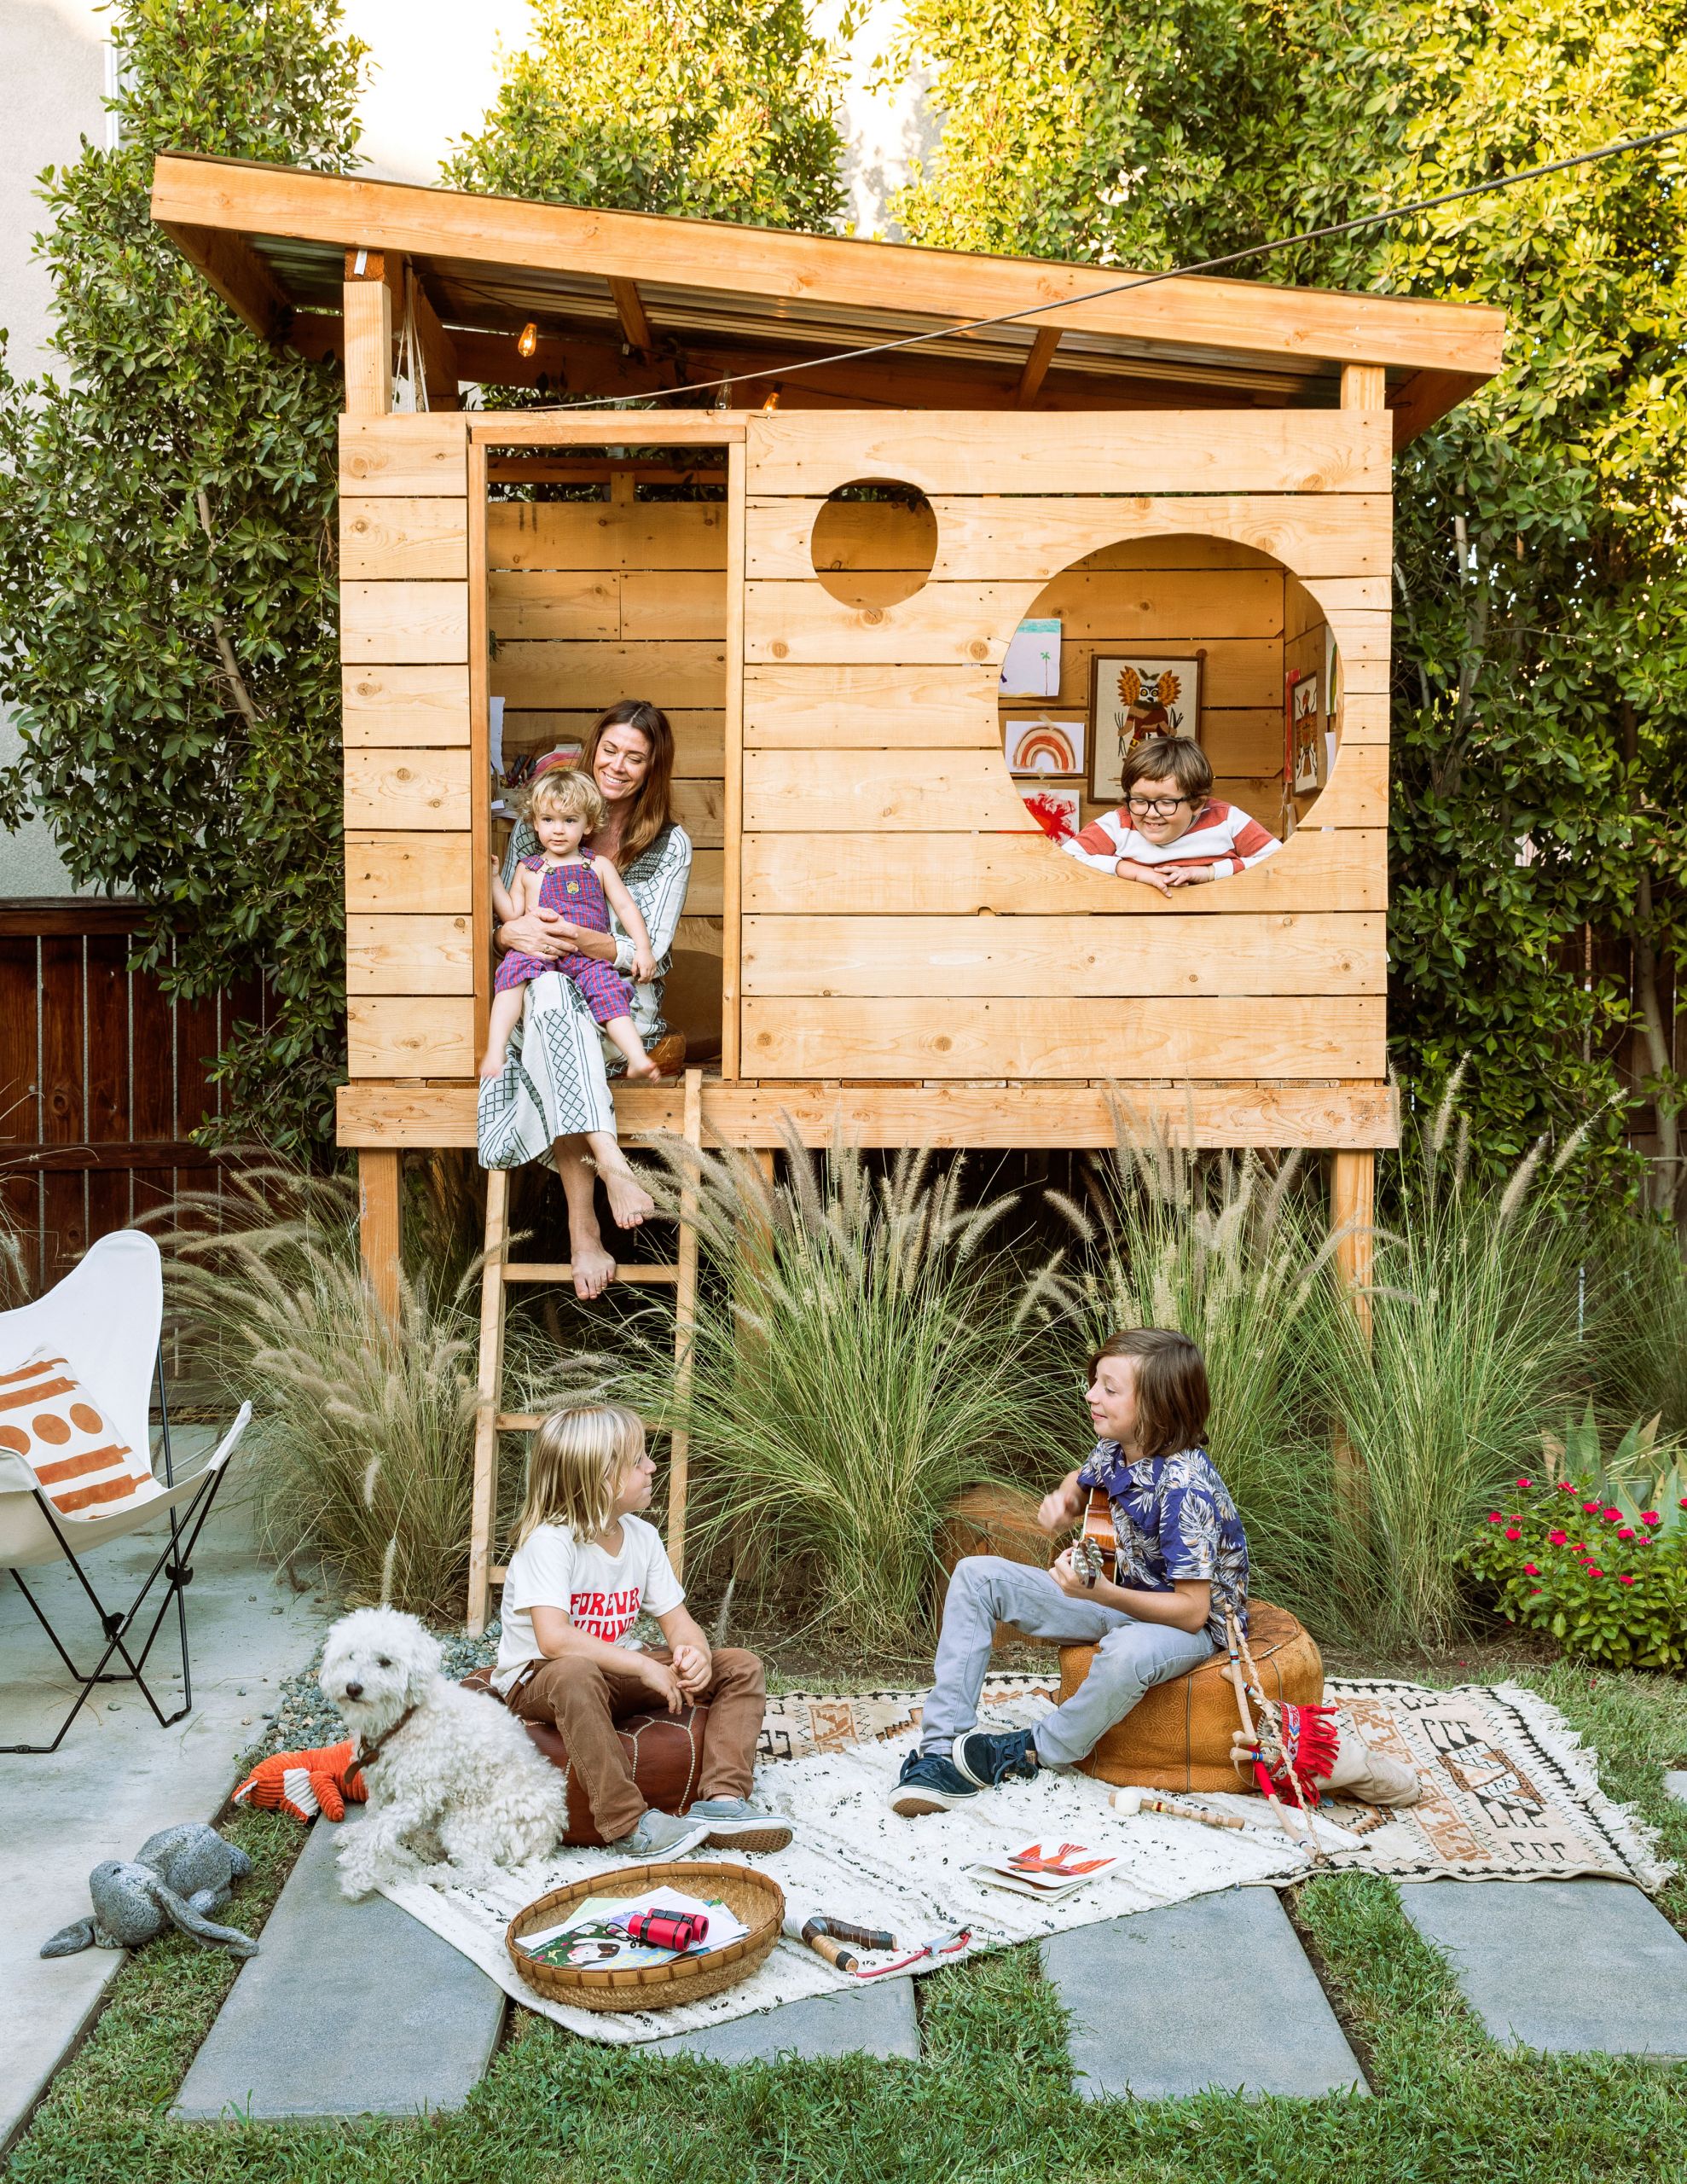 DIY Backyard Ideas For Kids
 Awesome Backyard Ideas for Kids Sunset Sunset Magazine